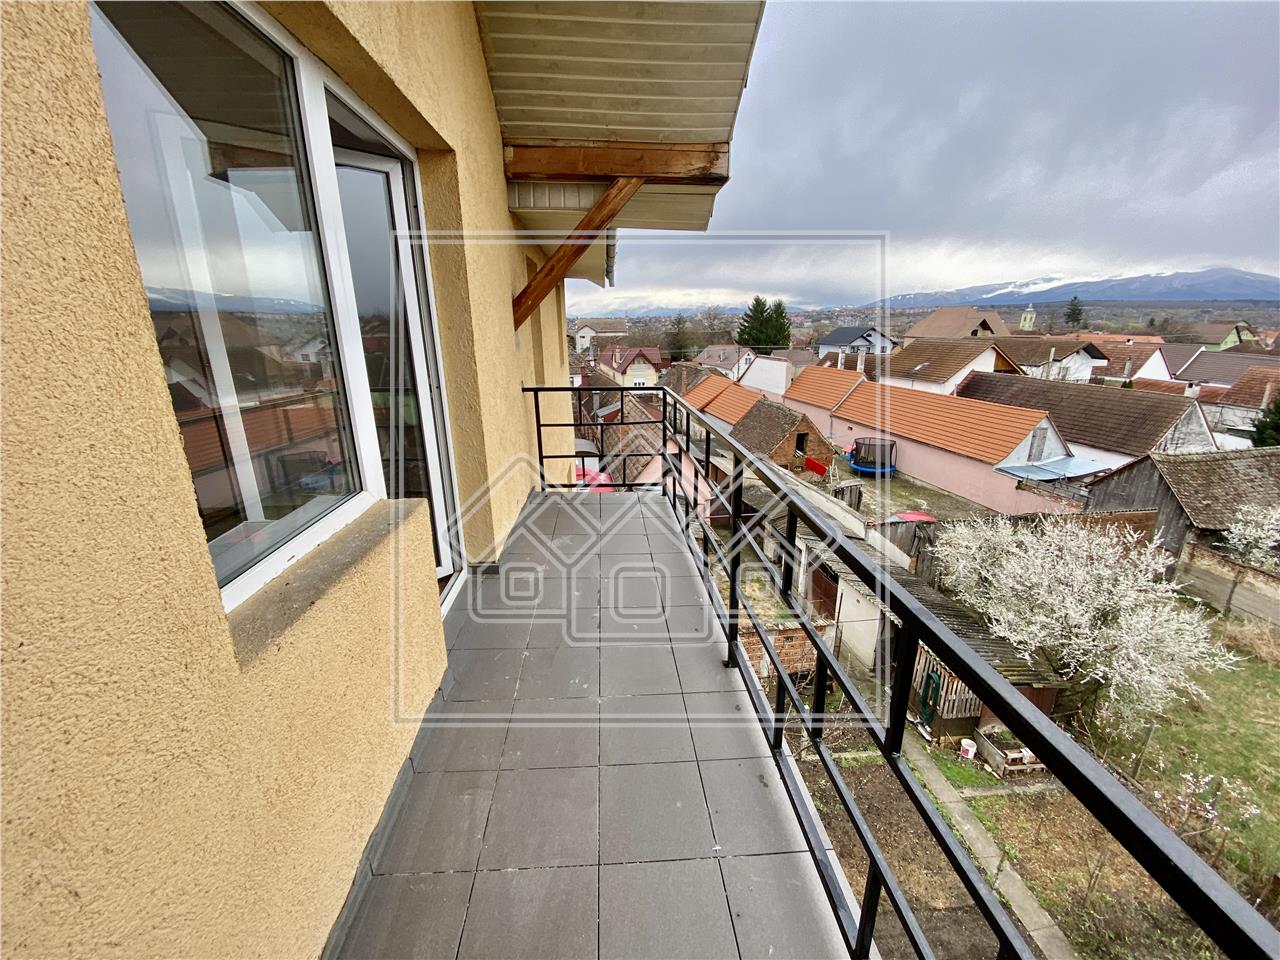 Apartament 3 rooms for sale in Sibiu - Turnisor area